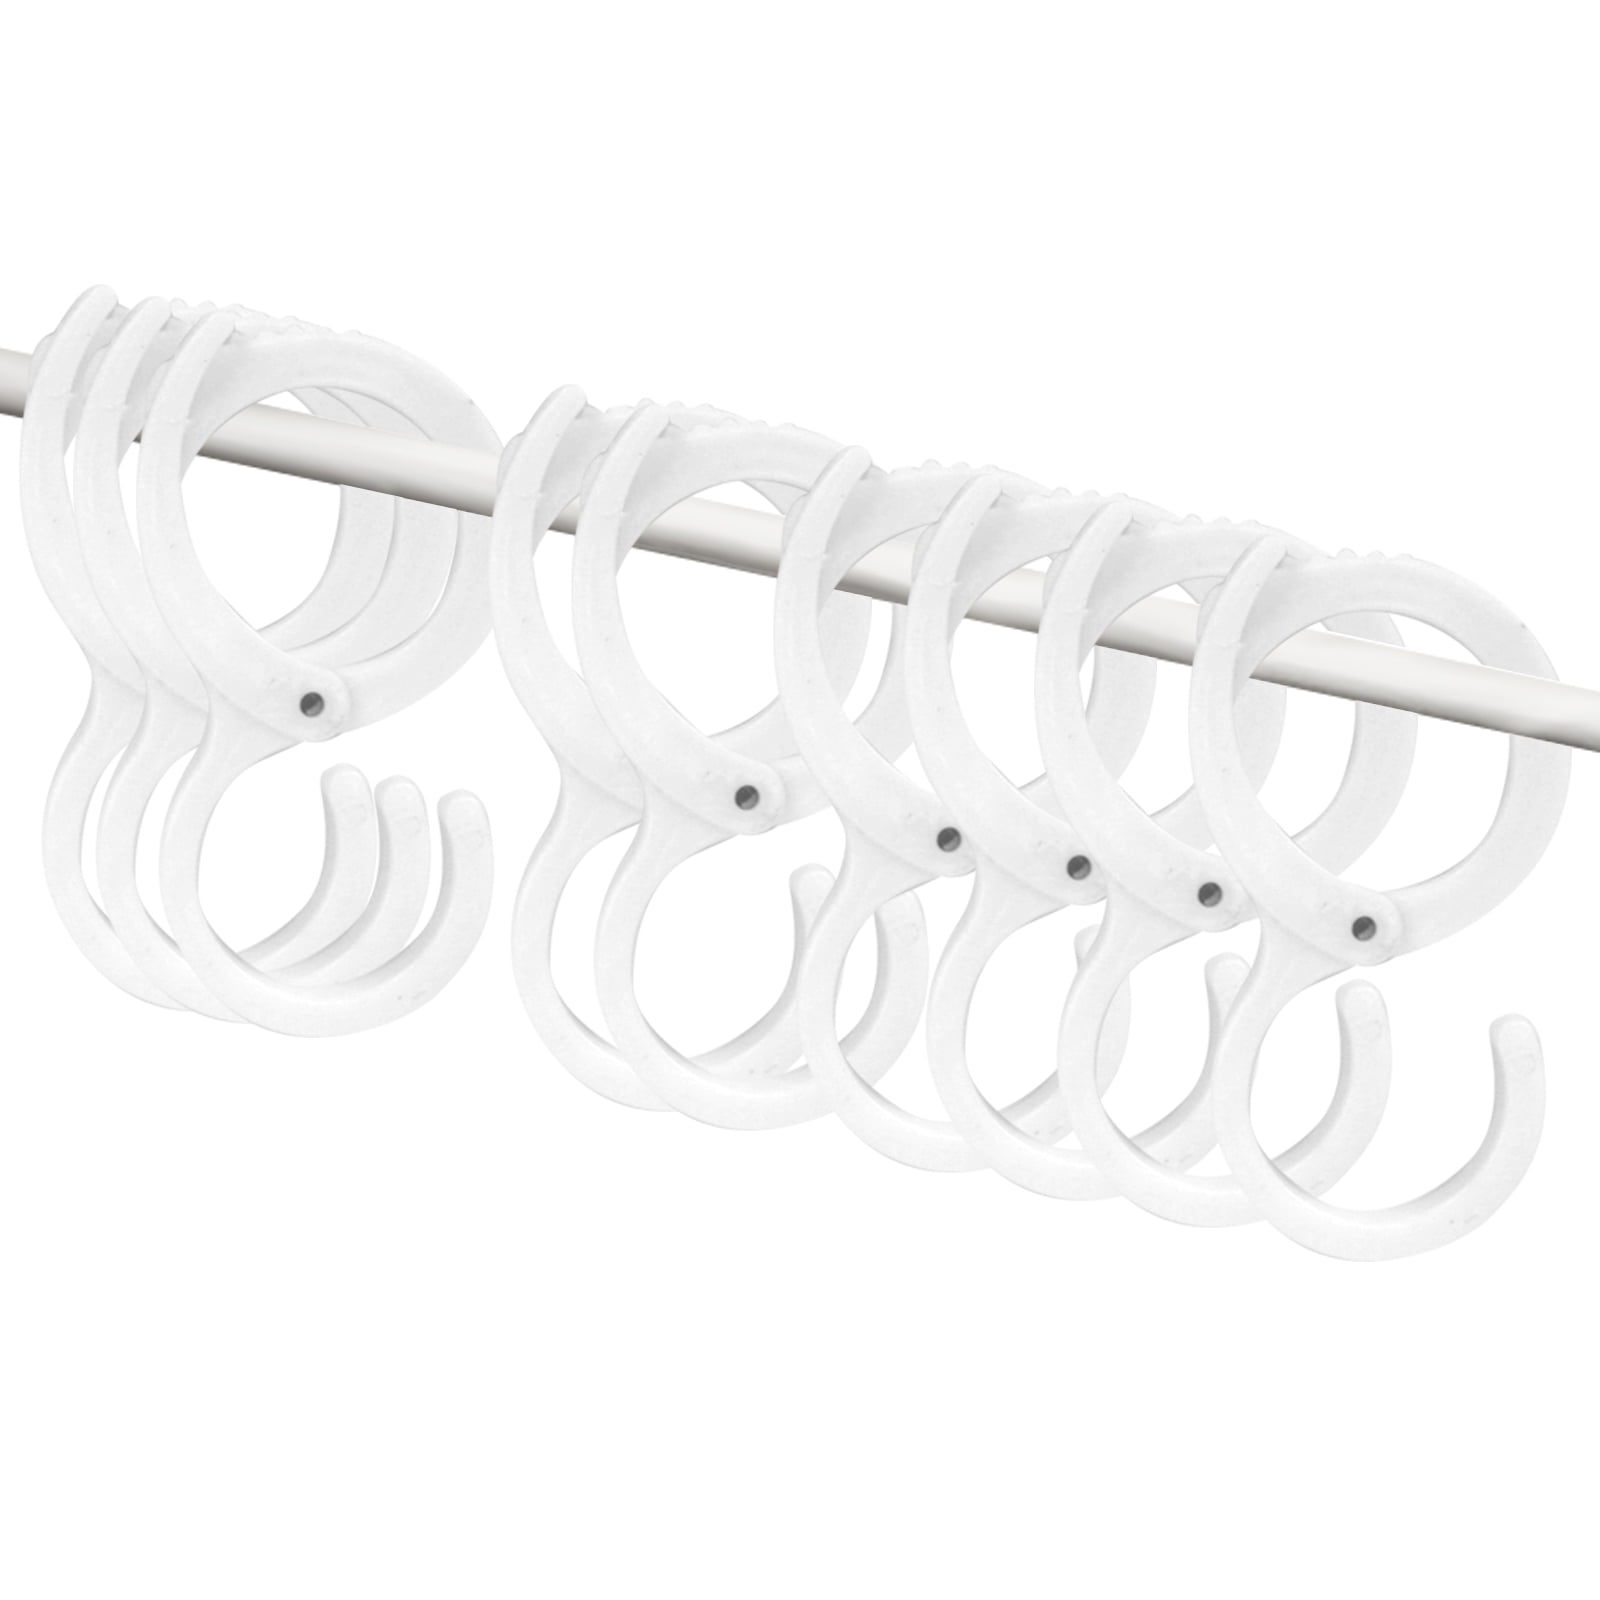 WEIGUZC bher 15 pack closet rod s hooks ,durable black metal hooks